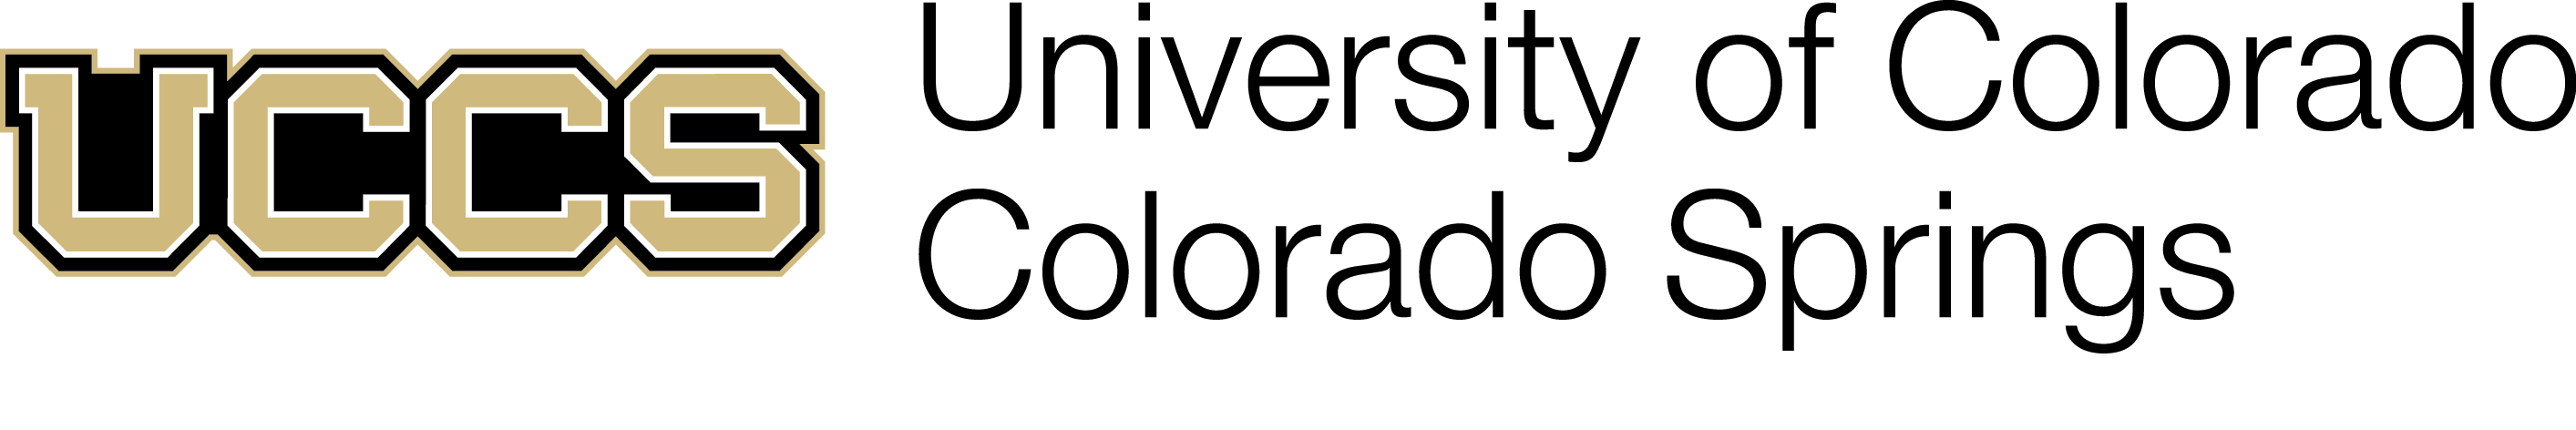 uccs logo